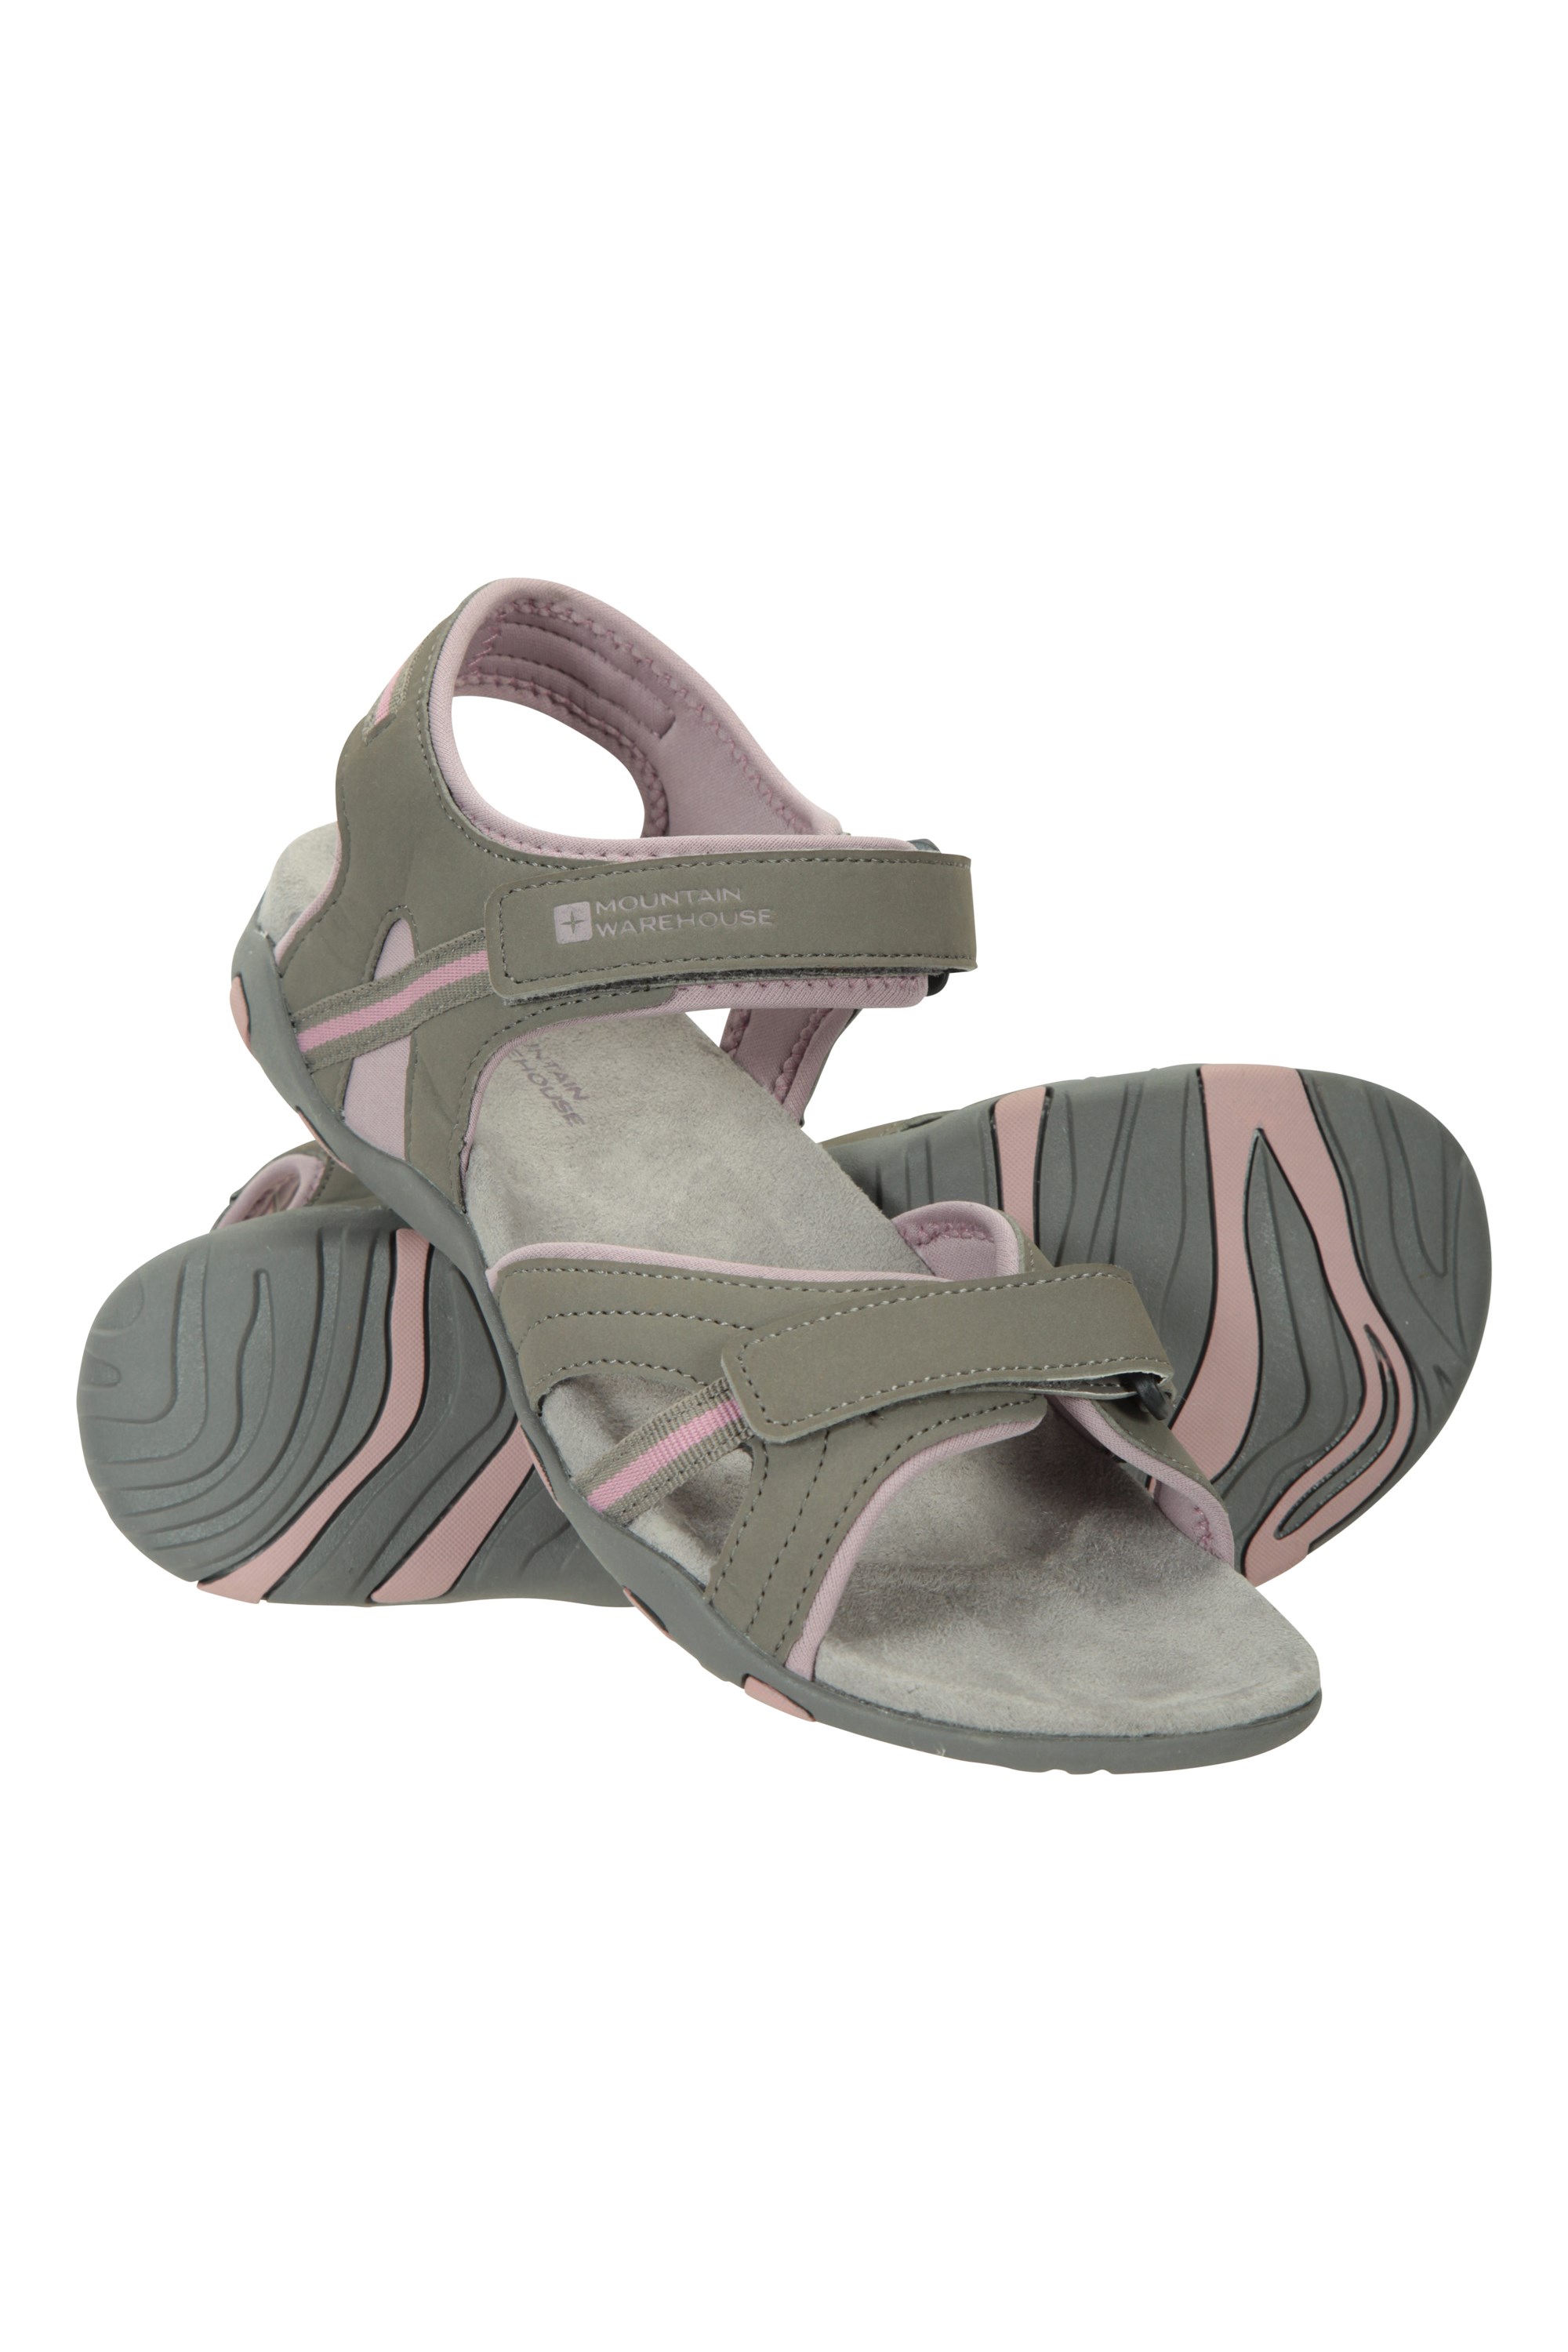 mountain warehouse ladies sandals